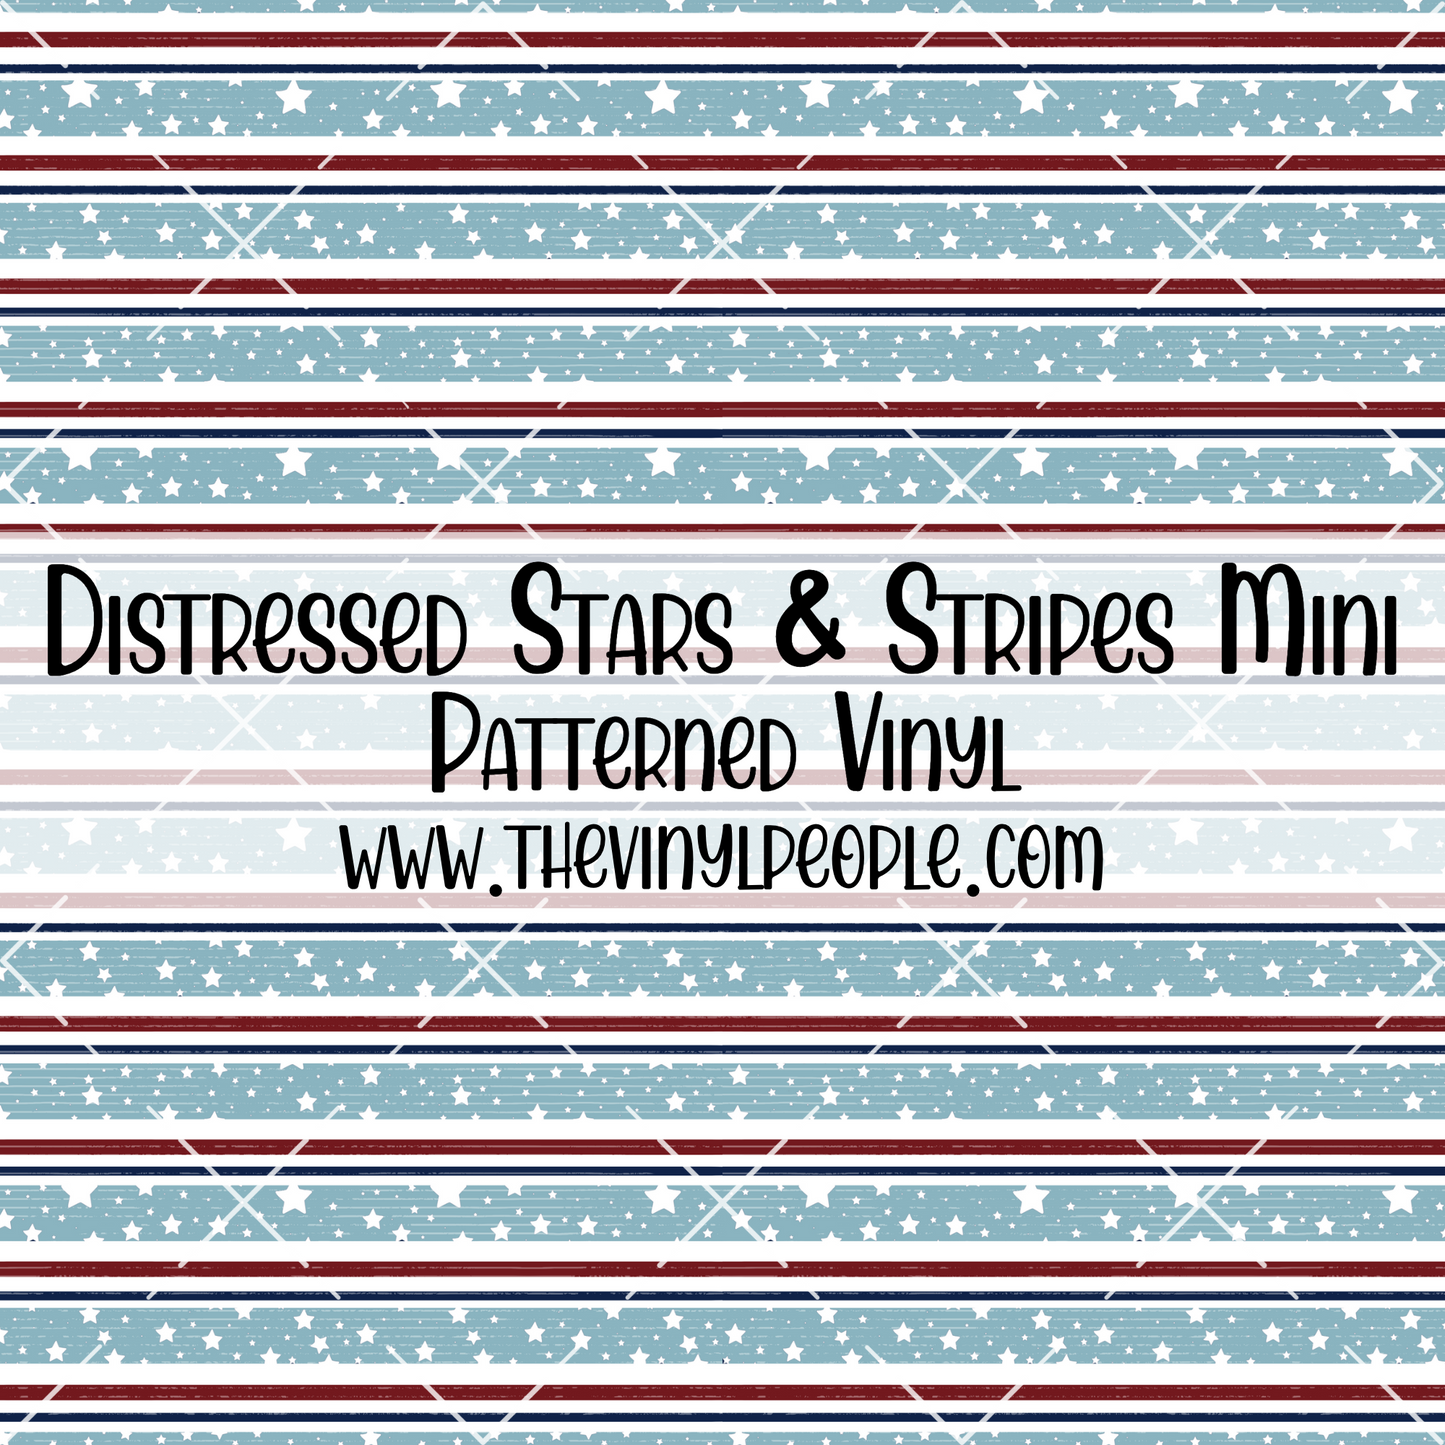 Distressed Stars & Stripes Patterned Vinyl